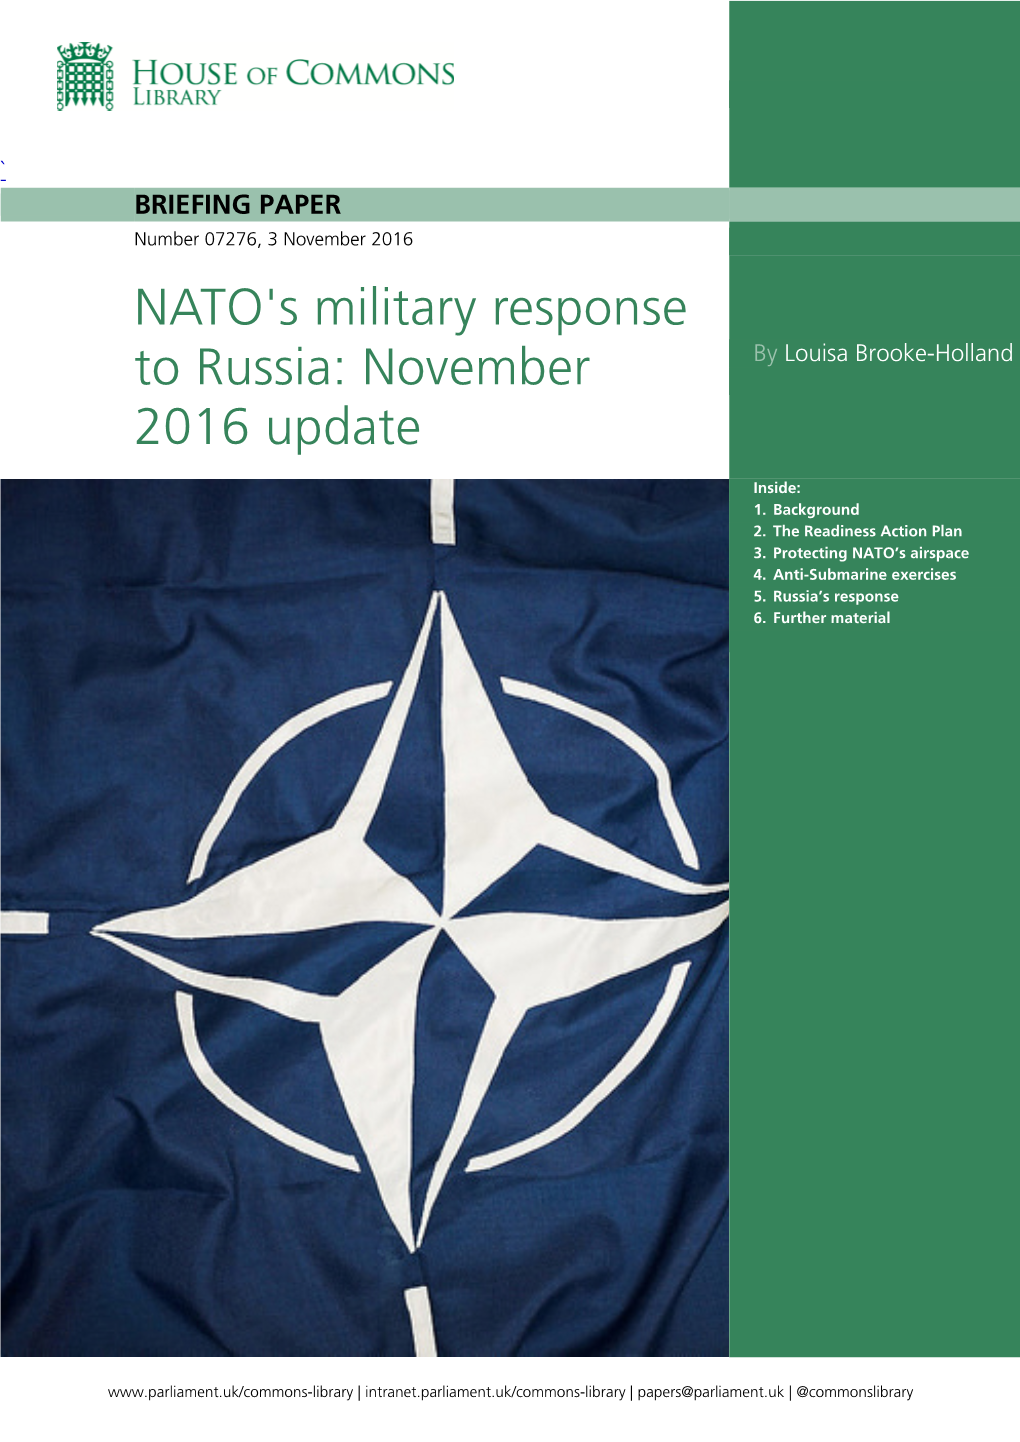 NATO's Military Response to Russia: November 2016 Update